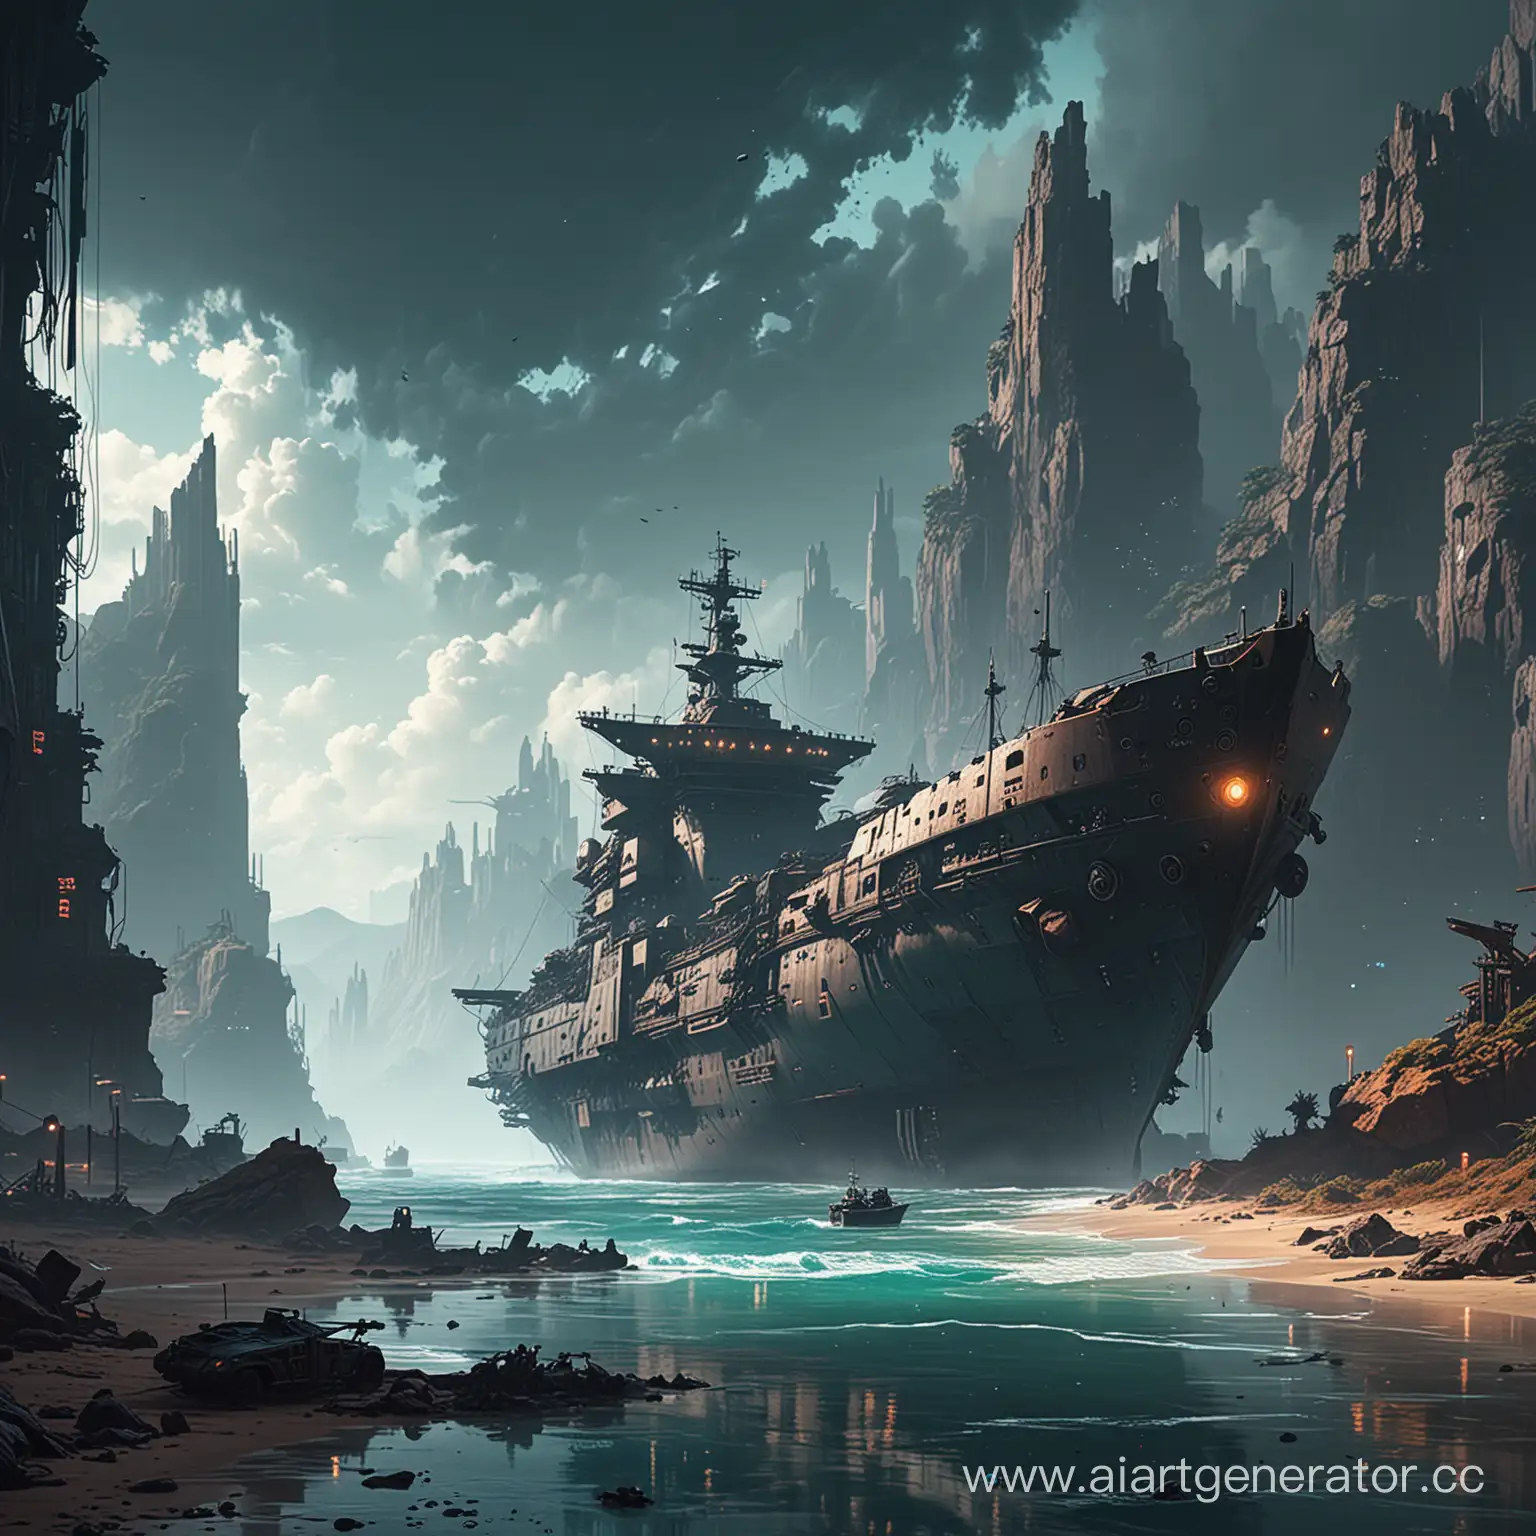 Futuristic-Cyberpunk-Ship-Sailing-Through-Neonlit-Cityscape